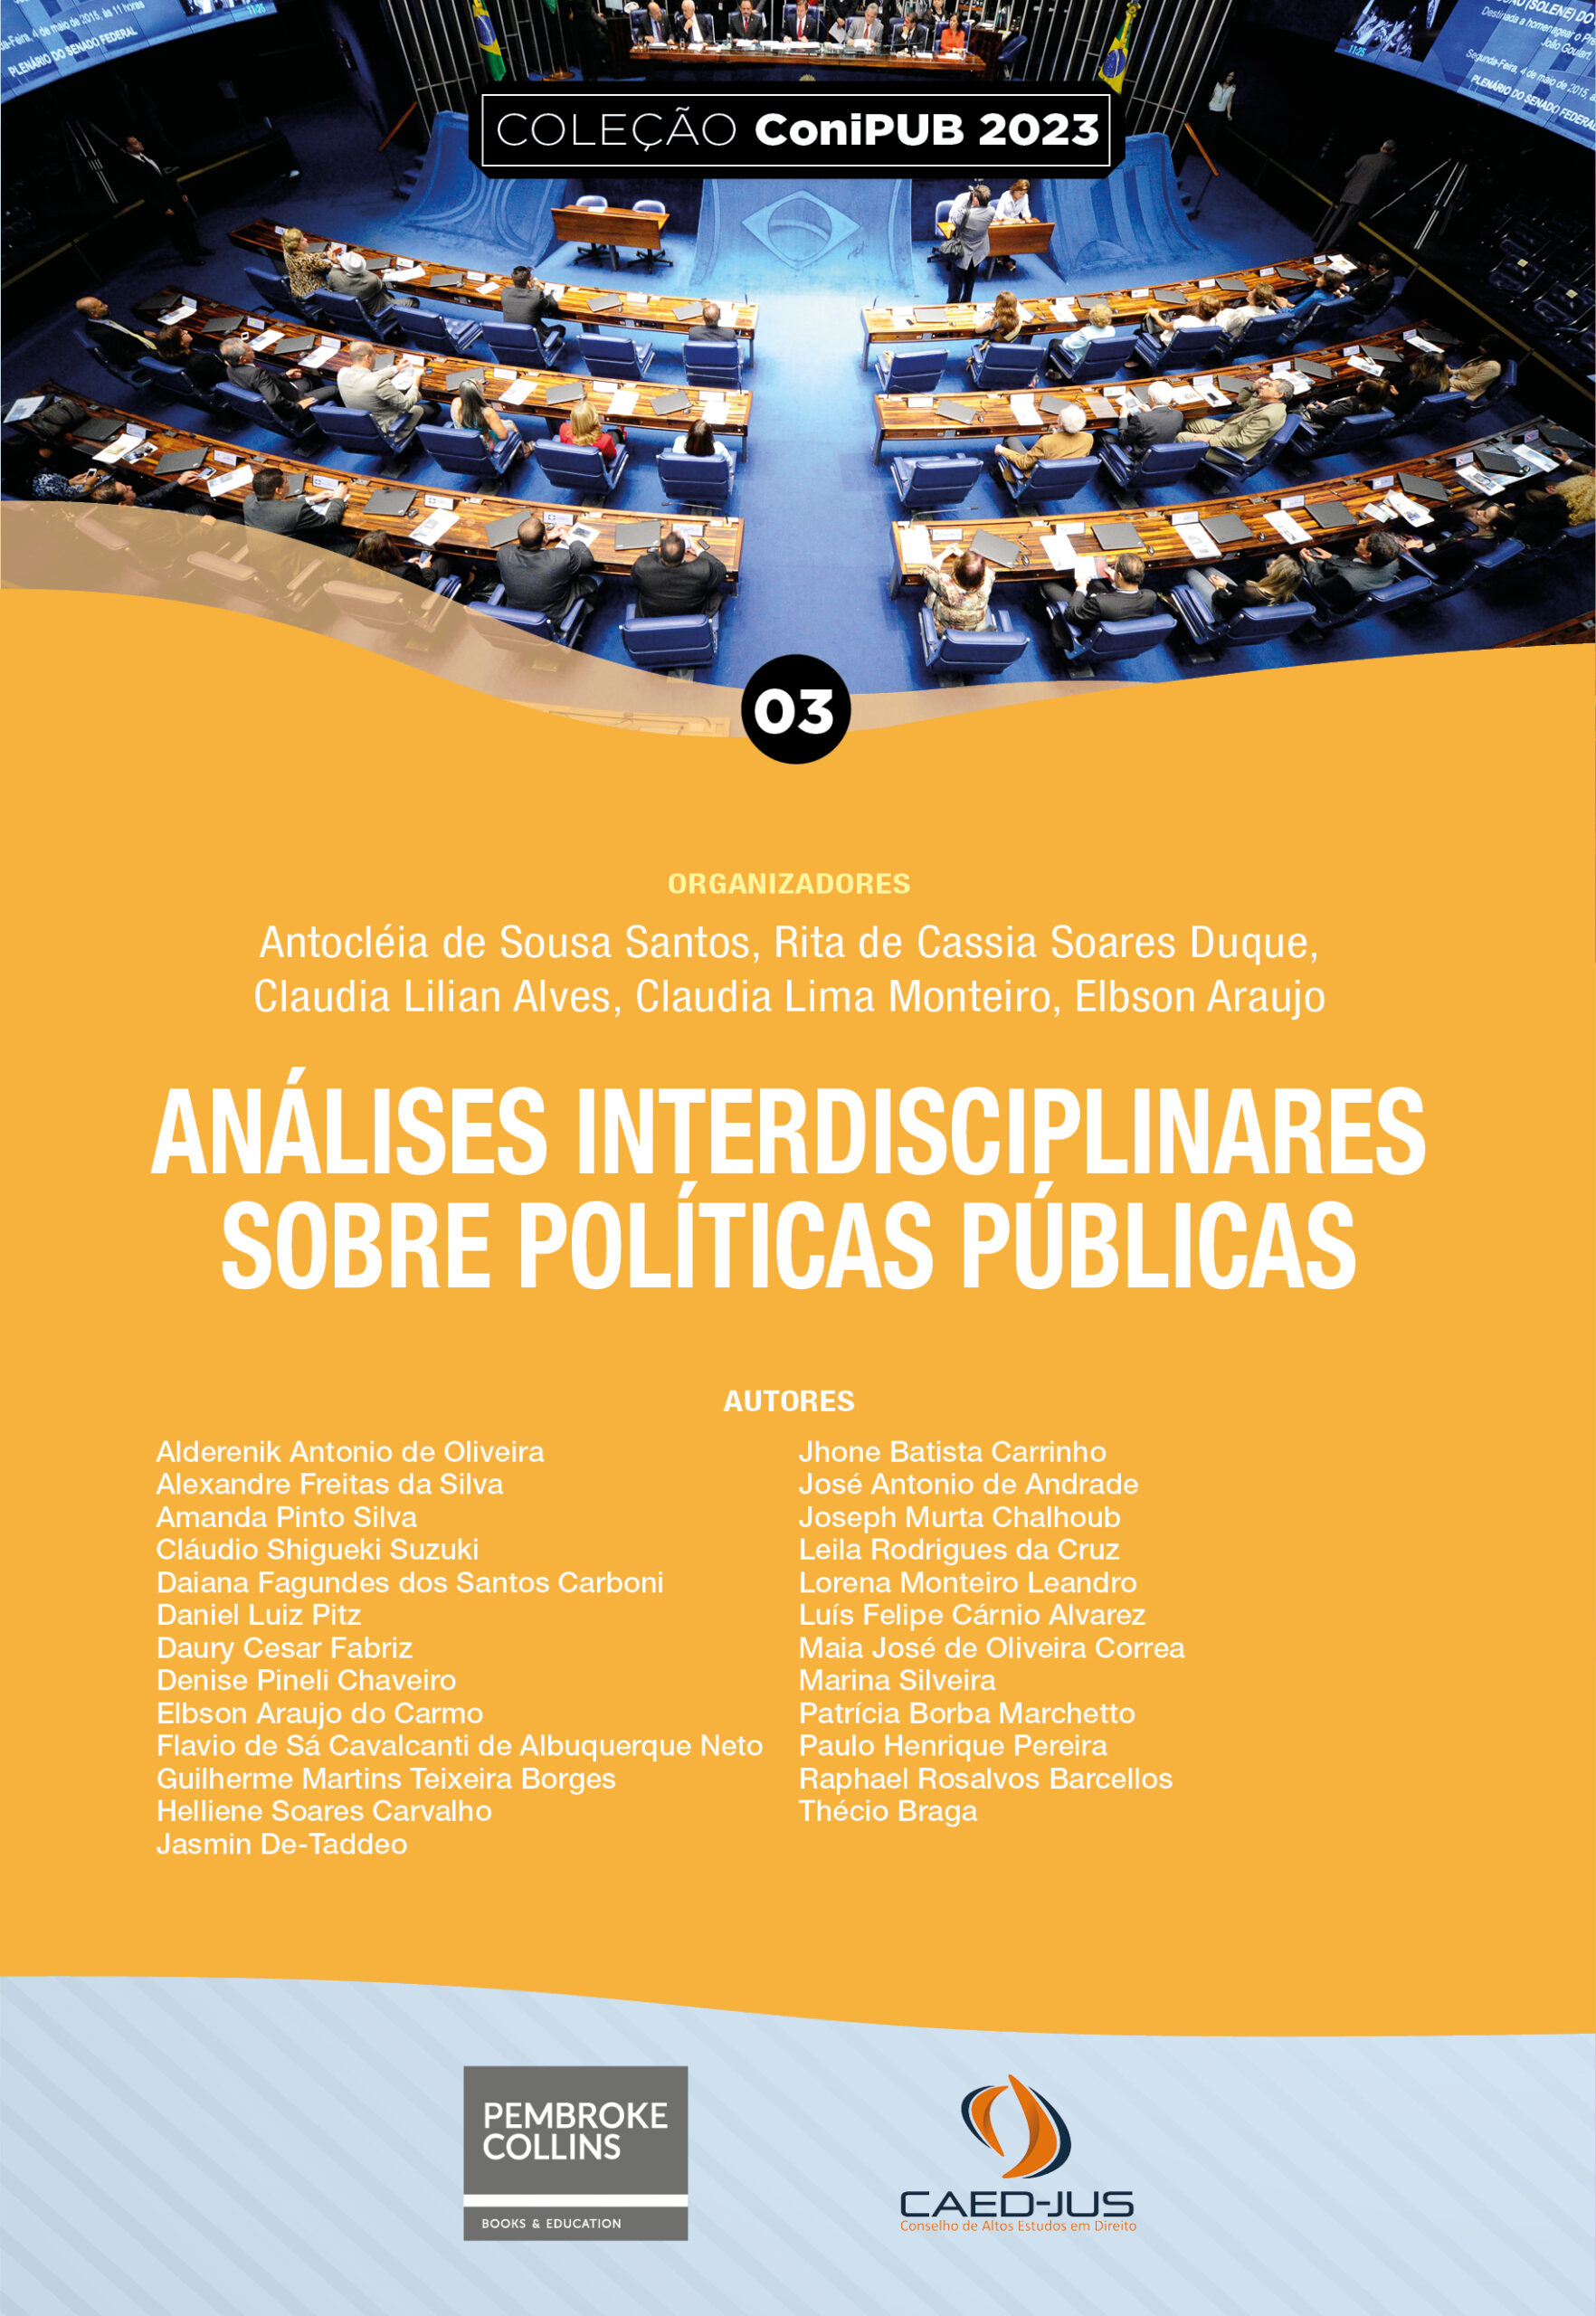 03_Capa_CONIPUB 2023_ANÁLISES INTERDISCIPLINARES SOBRE POLÍTICAS PÚBLICAS